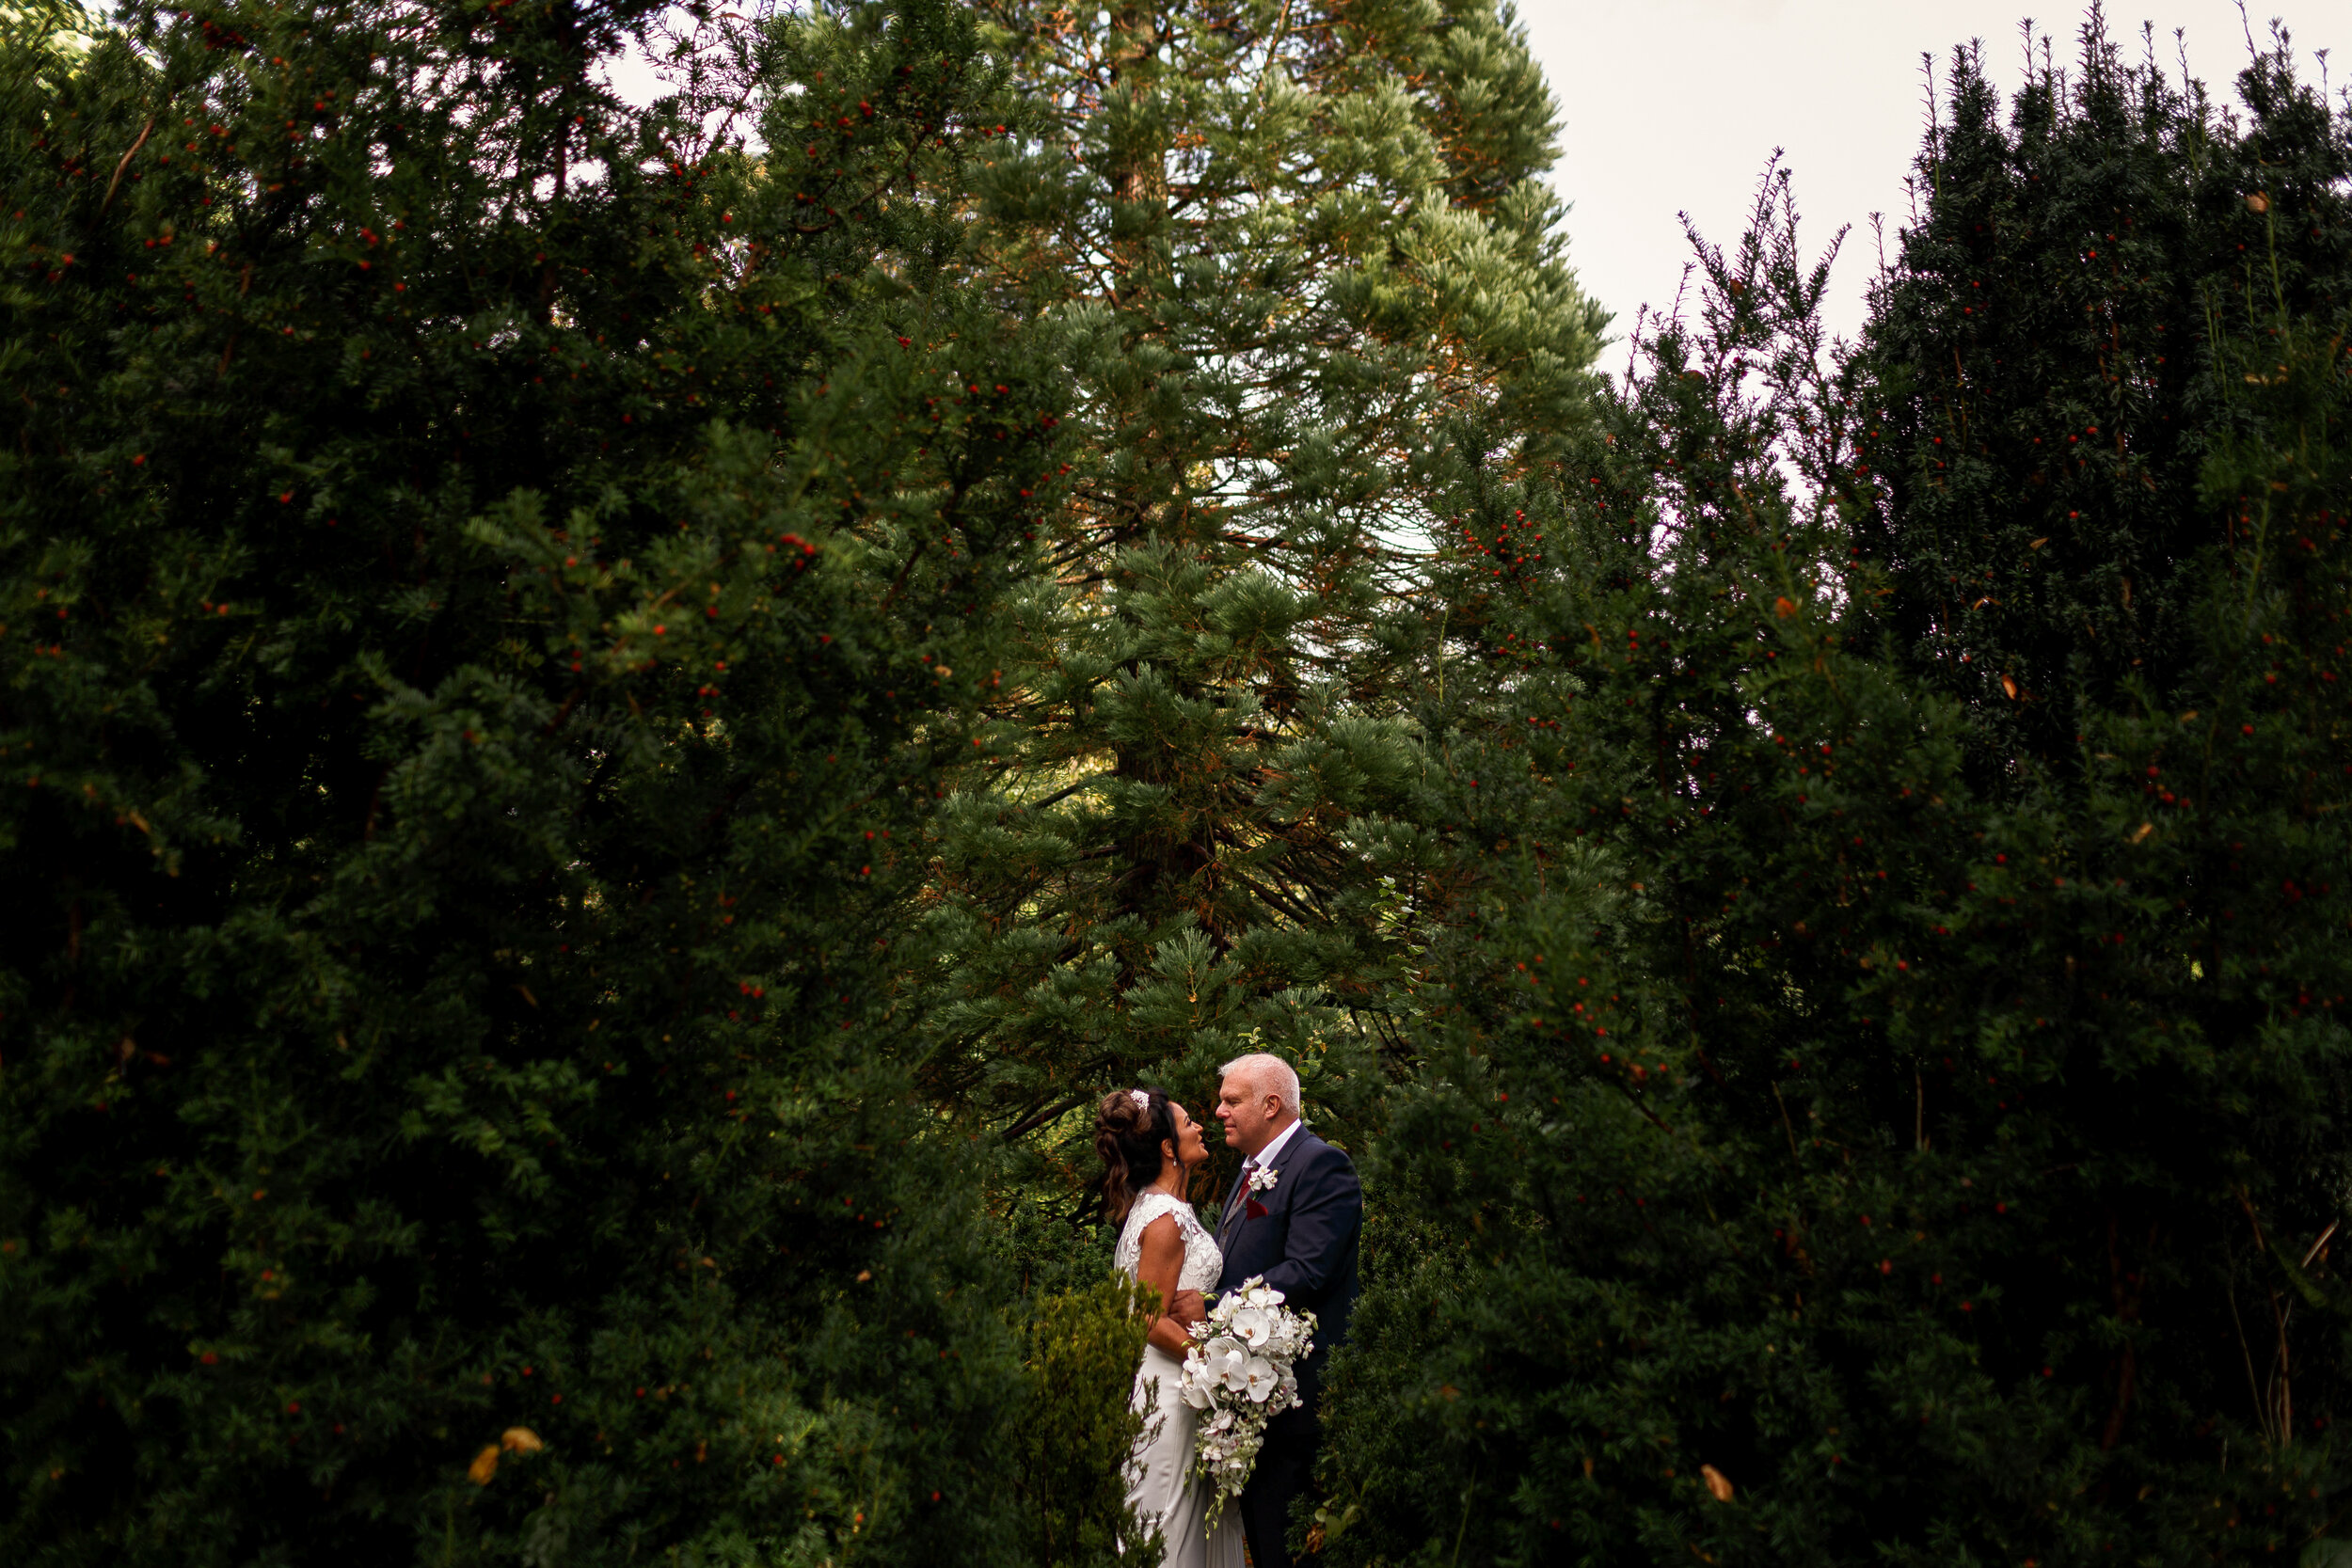 19_09_28-Wedding Photography-Bredbury Hall-358.jpg